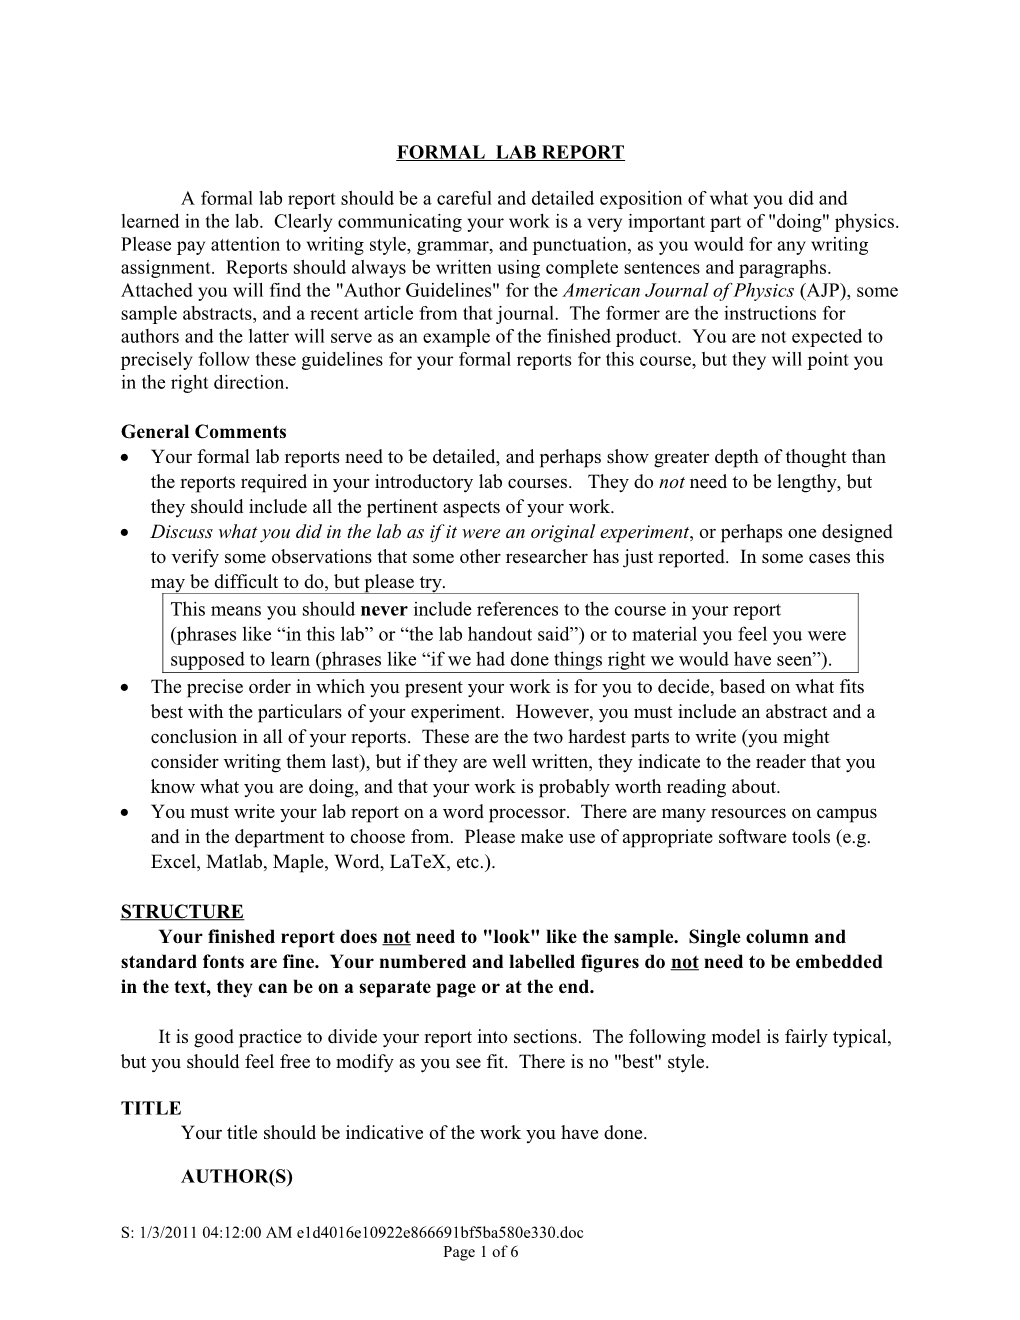 Moelter Formal Lab Reportpage 1 of 6